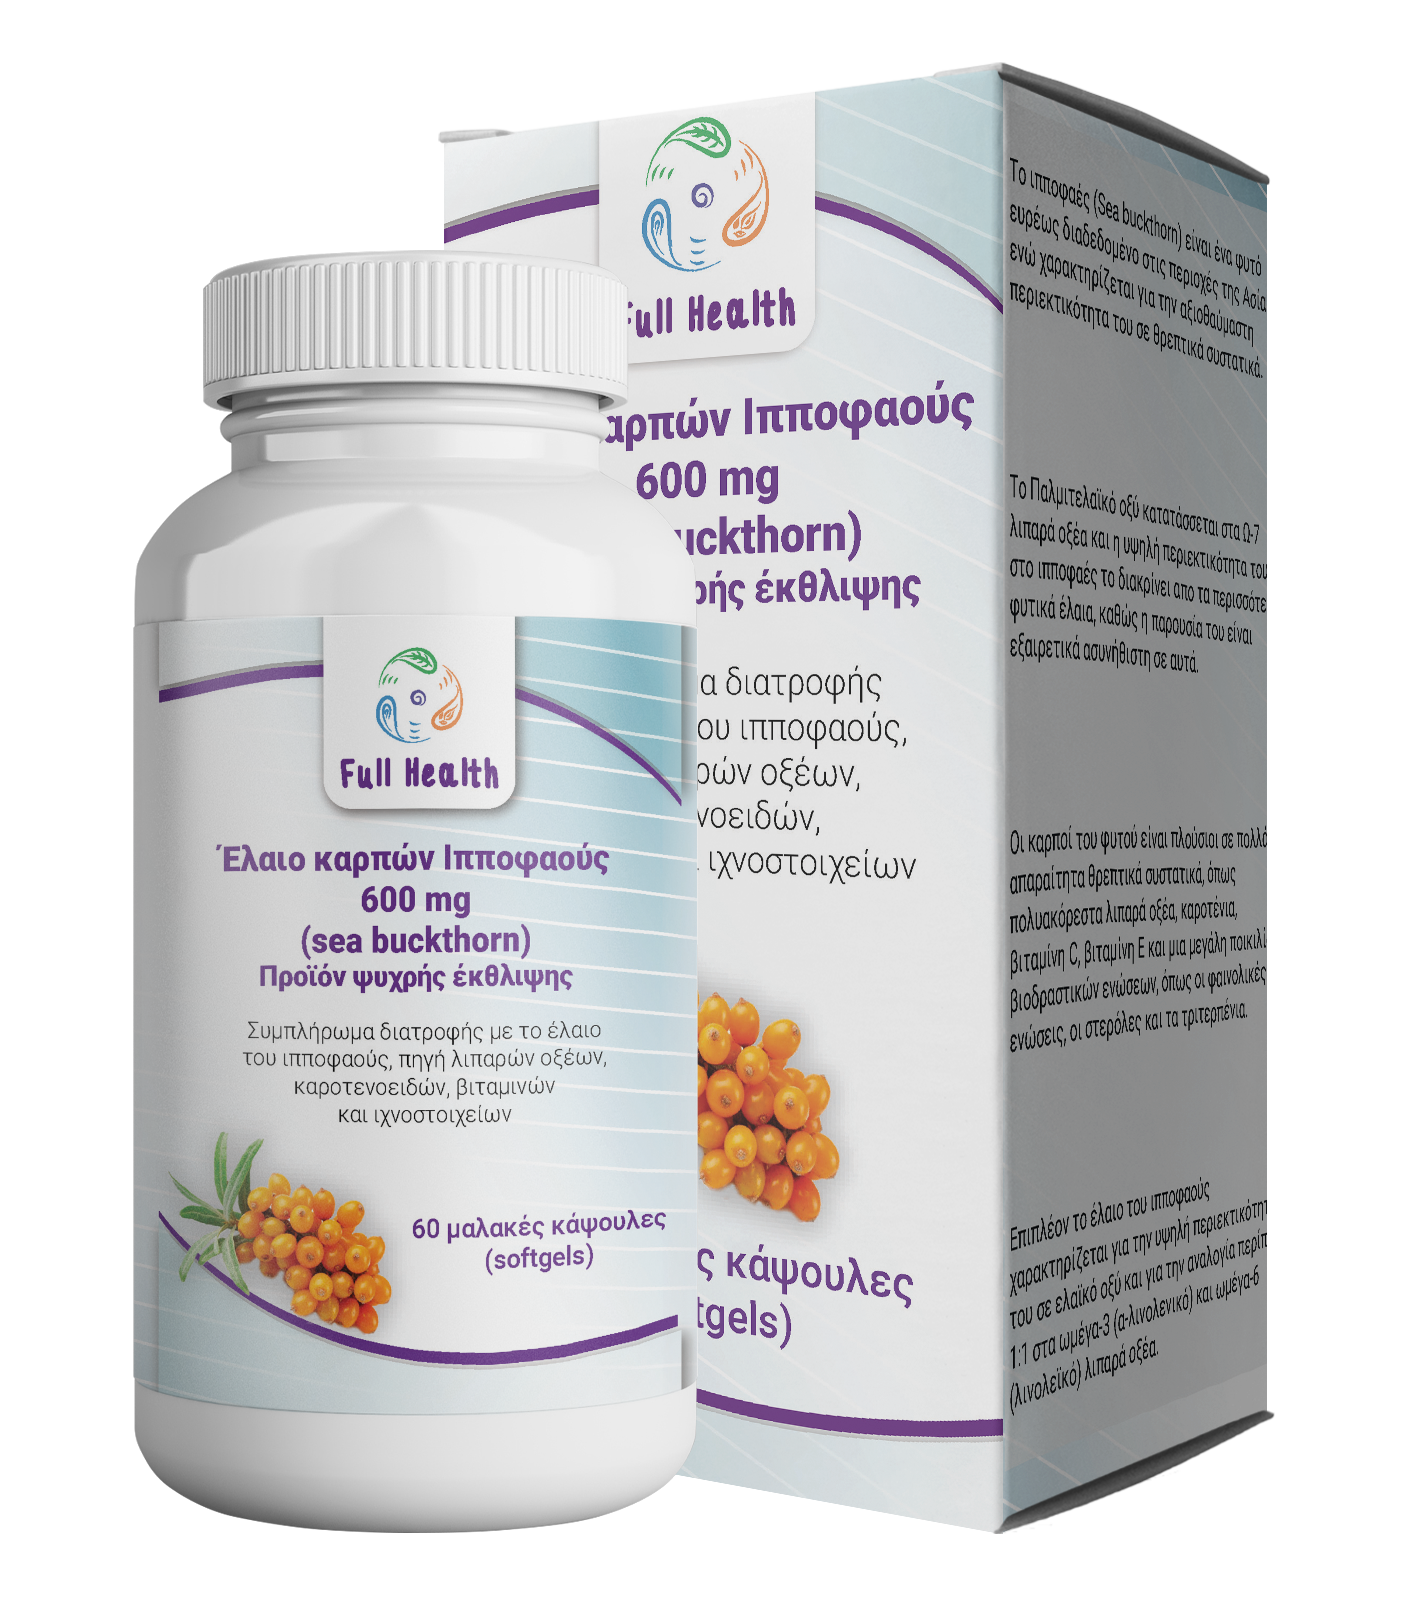 Full Health Έλαιο καρπών ιπποφαούς 600 mg 60 Caps (Συμπλήρωμα διατροφής με ιπποφαές, πηγή λιπαρών οξέων, καροτενοειδών, βιταμινών και ιχνοστοιχείων)